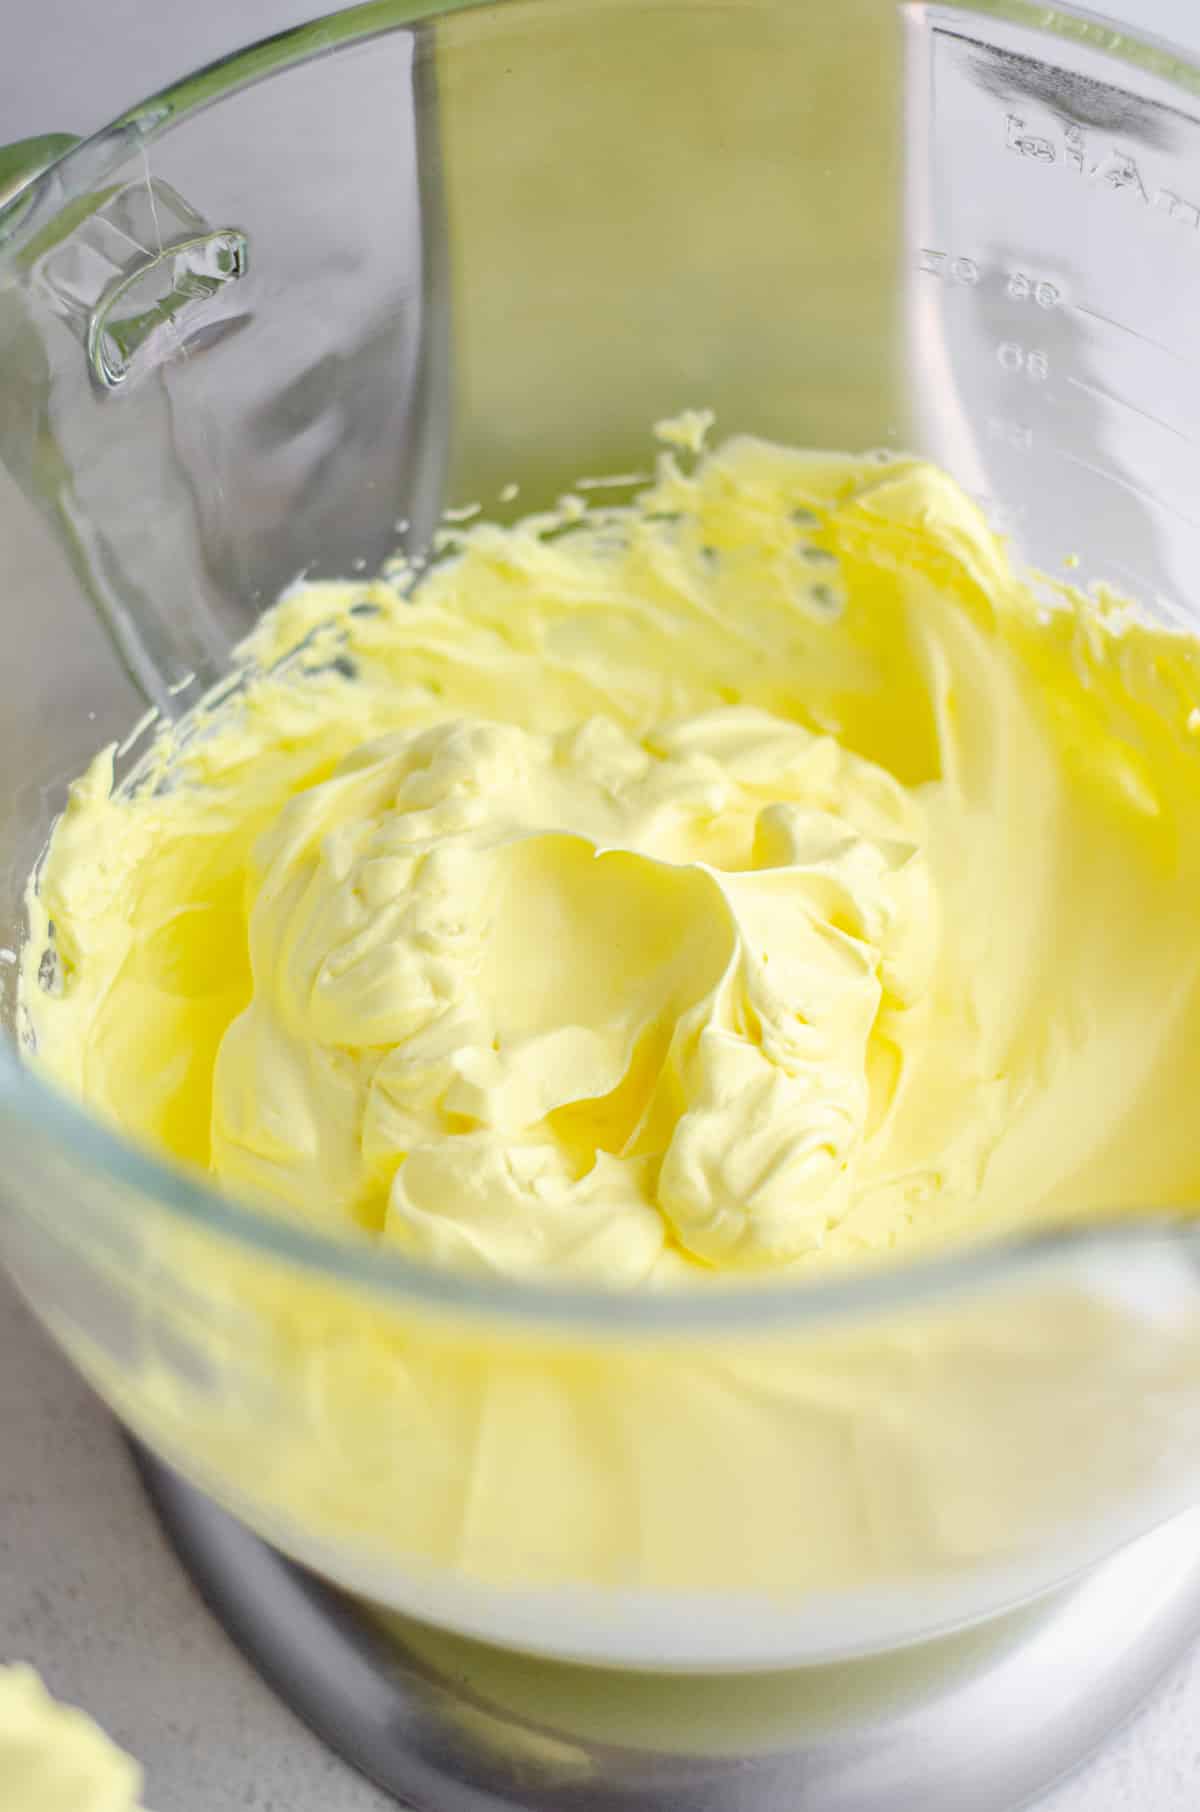 lemon macaron whipped egg whites in a glass bowl ready for macaronage